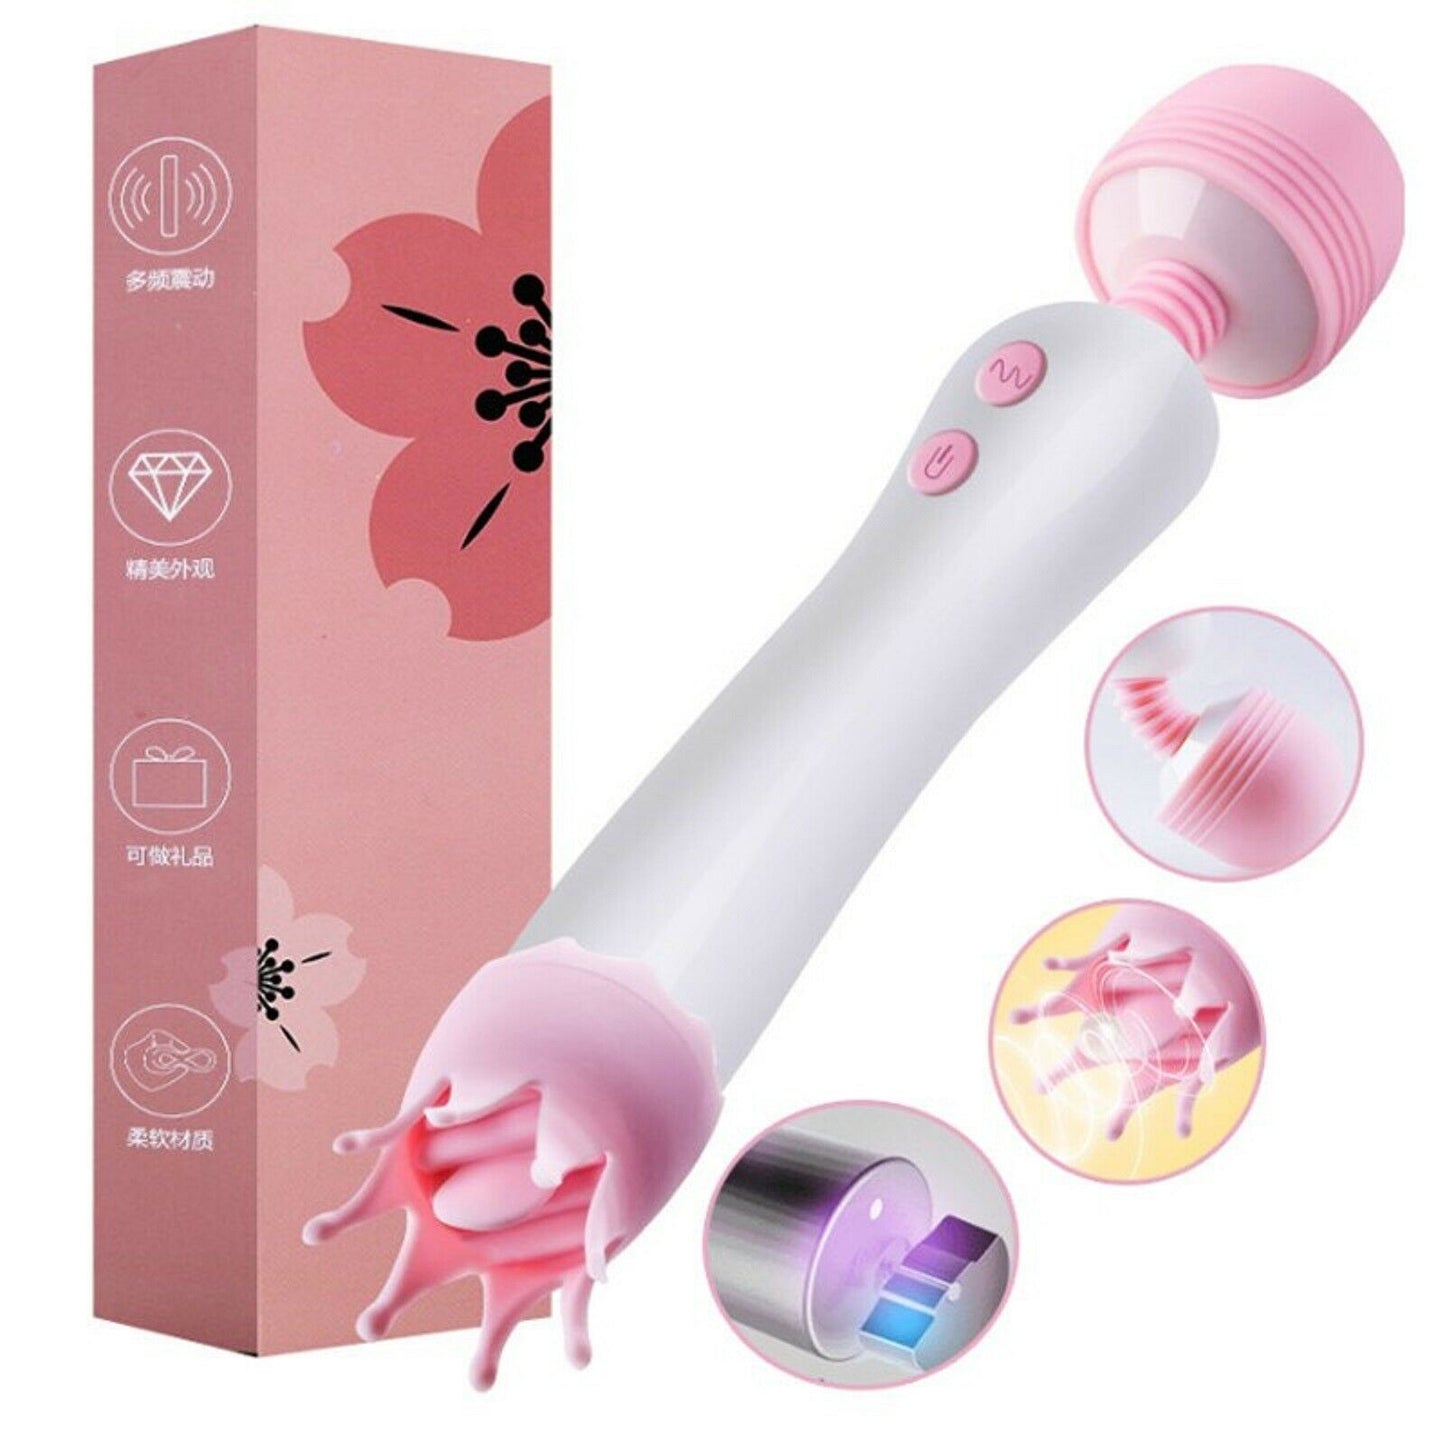 Dildo Wand Licking Vibrator Clit Stimulator Female Couples Massager Sex Toy NEW